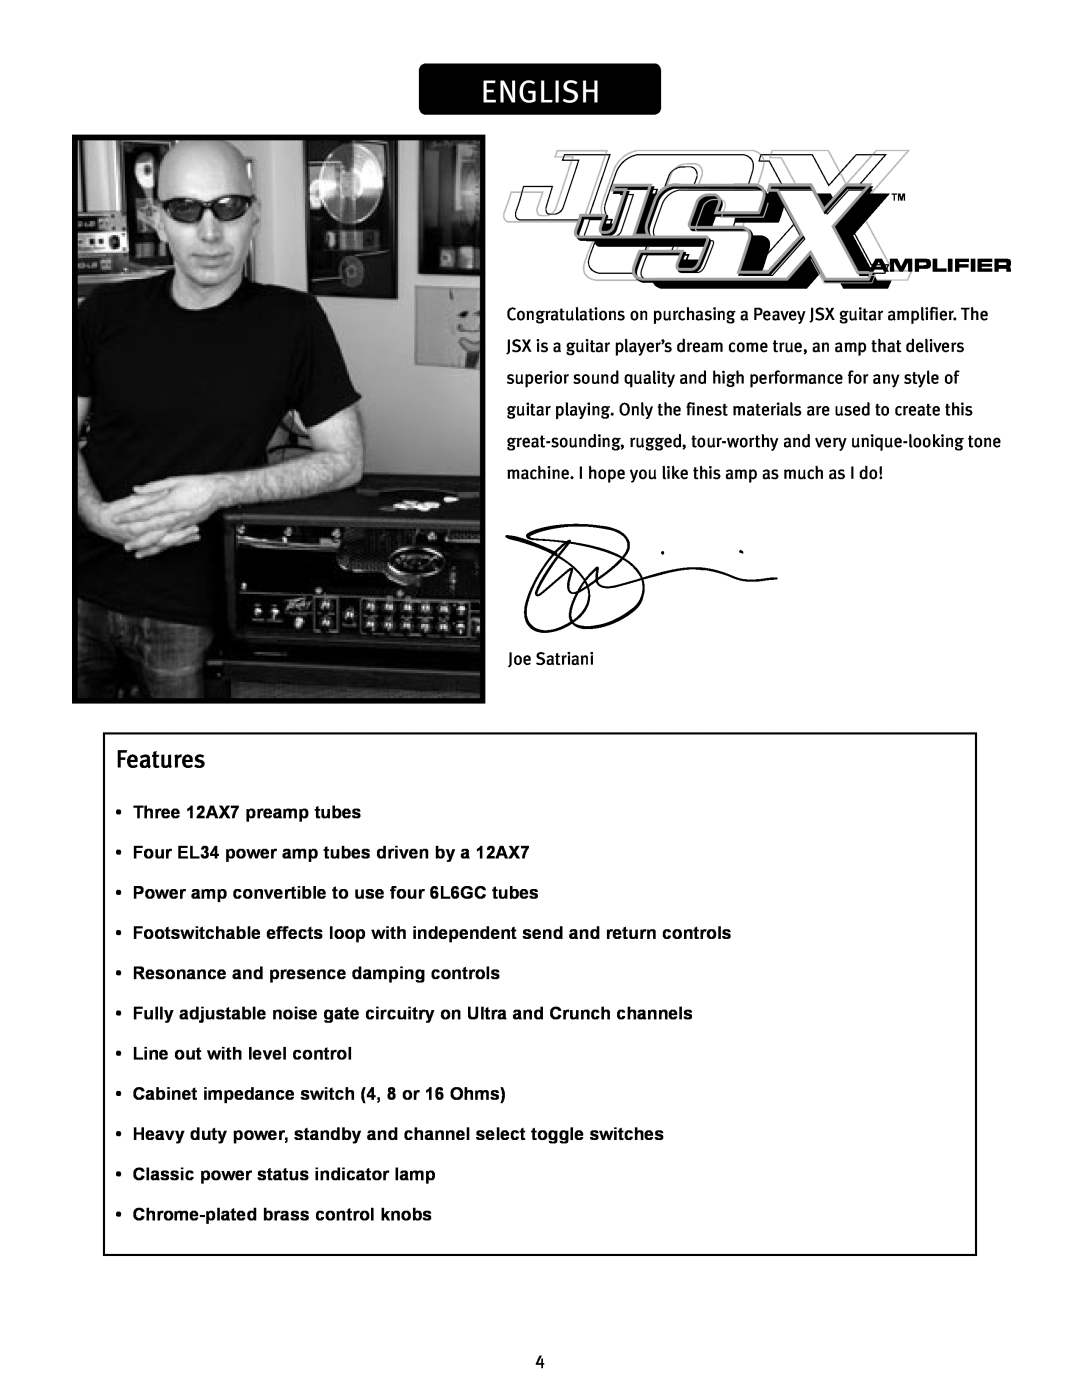 Peavey JSX Joe Satriani Signature All-Tube Amplifier manual English, Features 